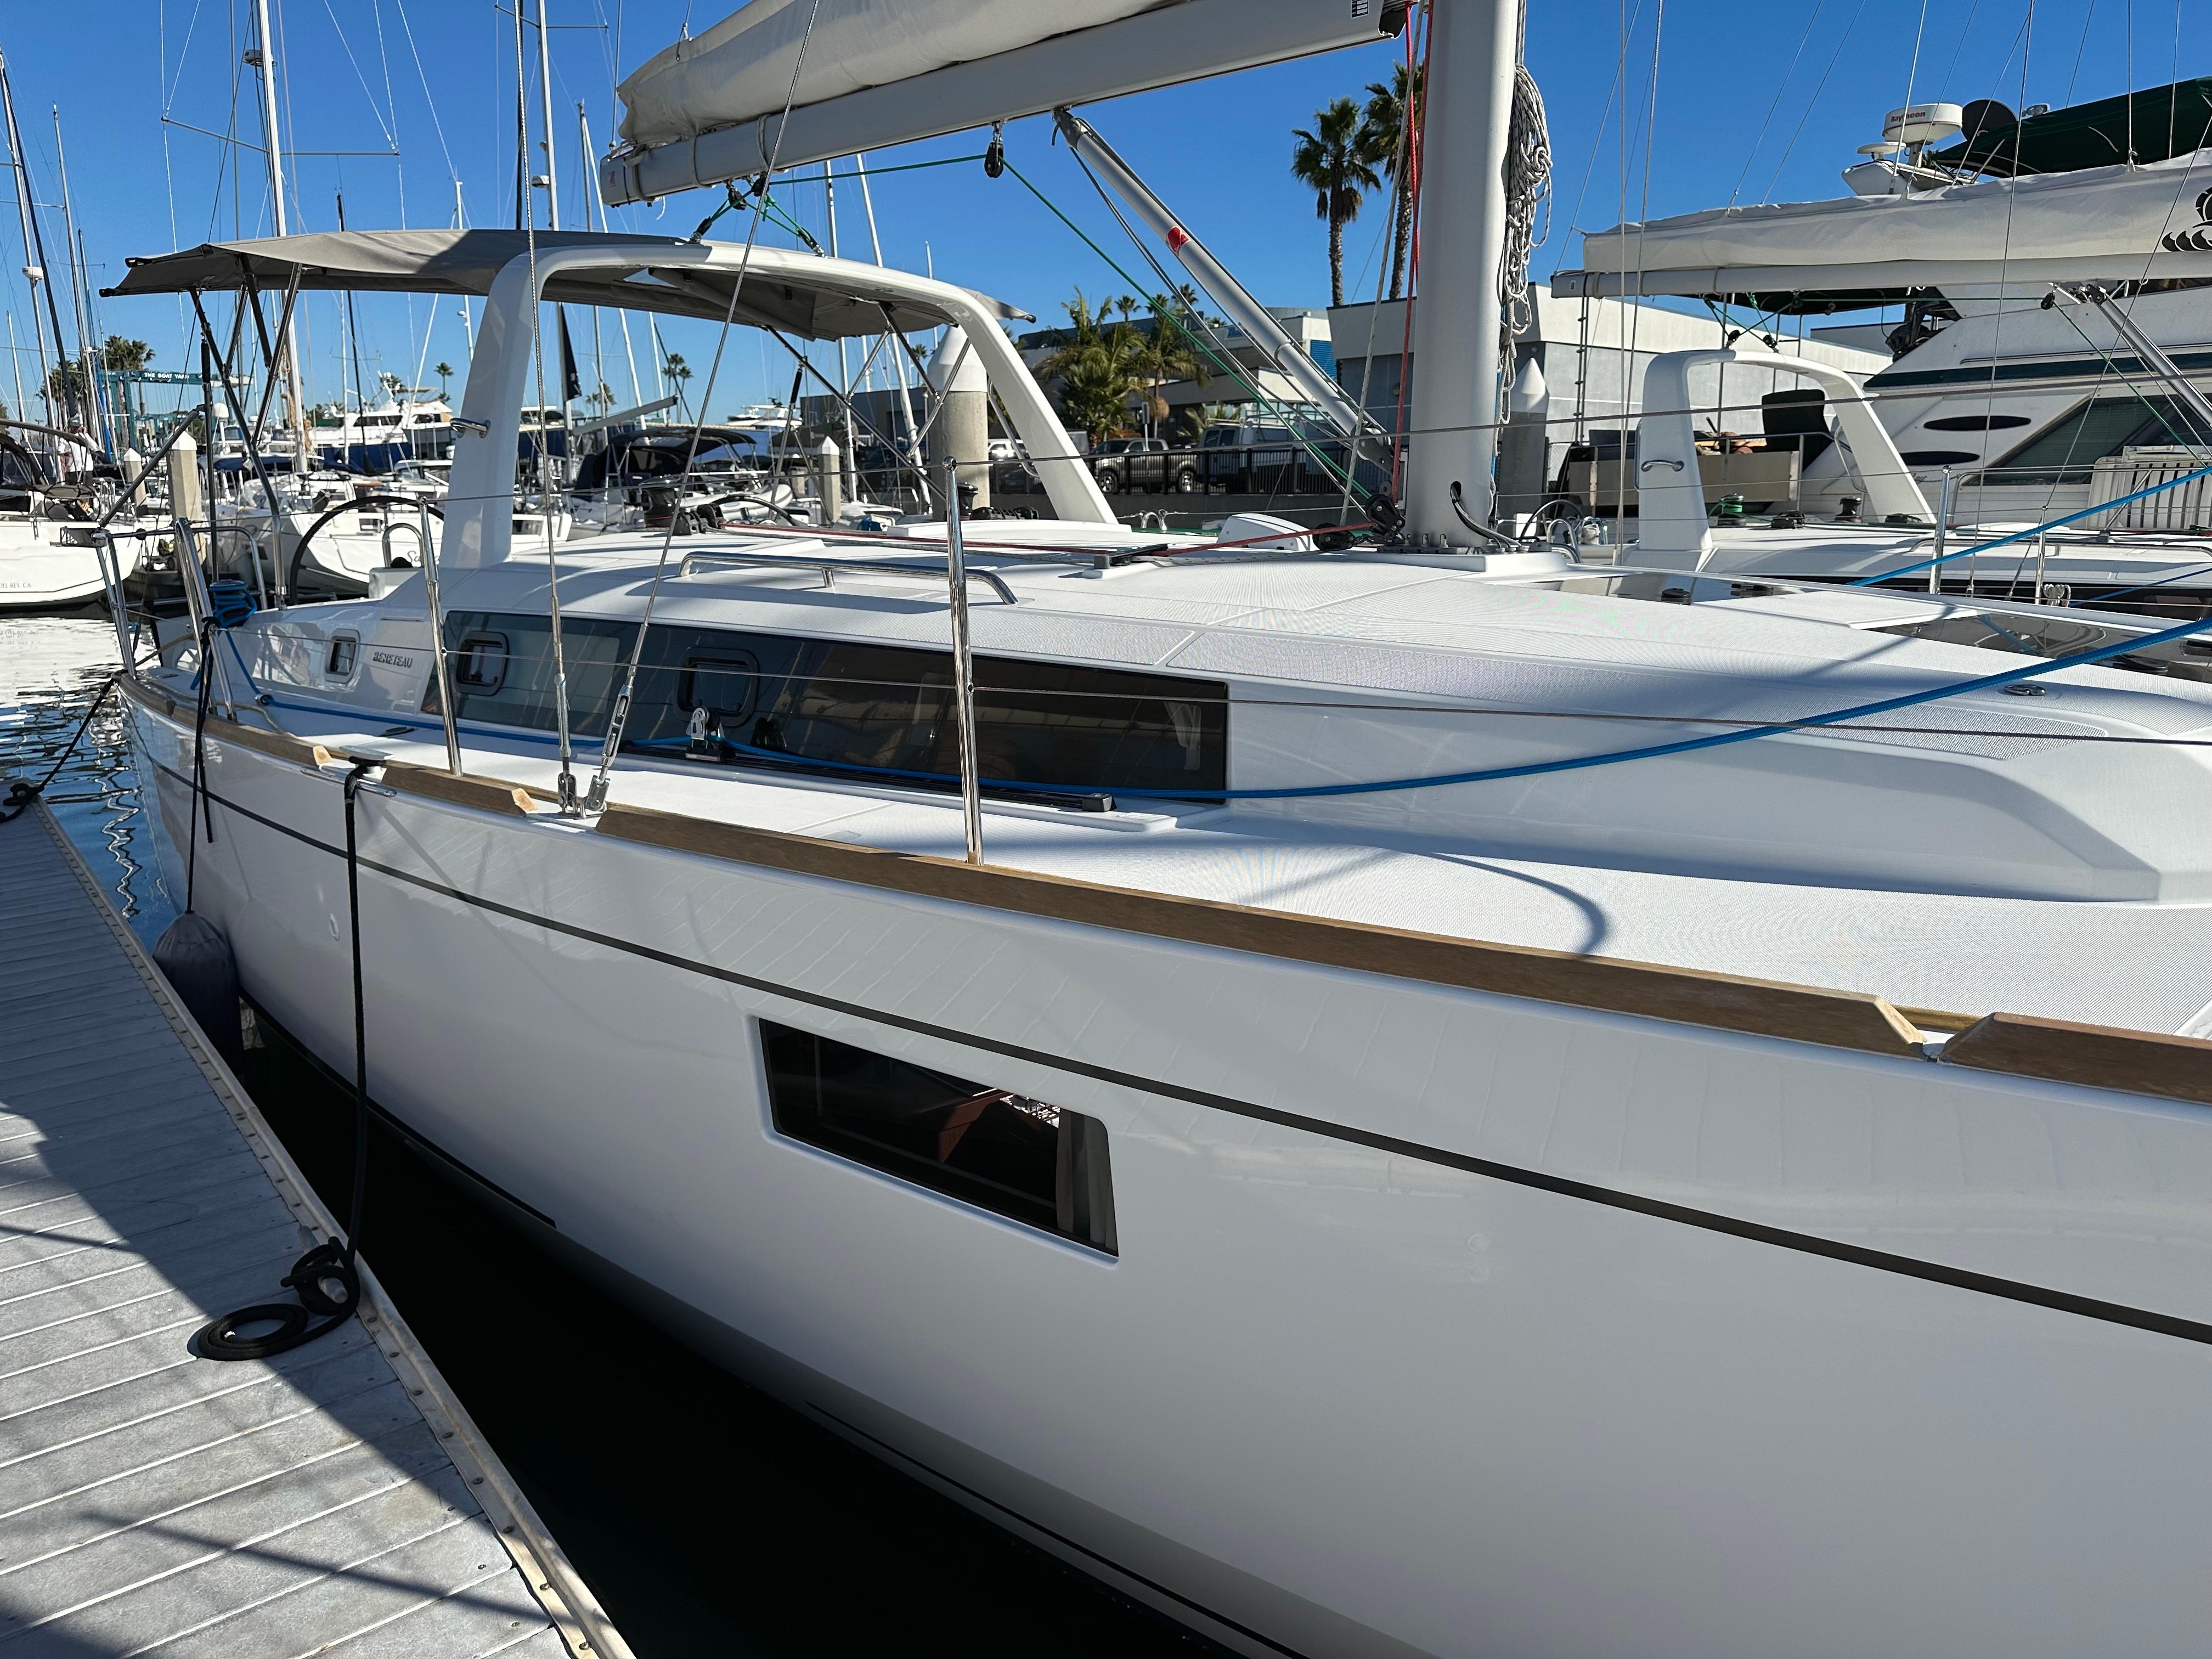 37.75′ Beneteau 2020 Yacht for Sale